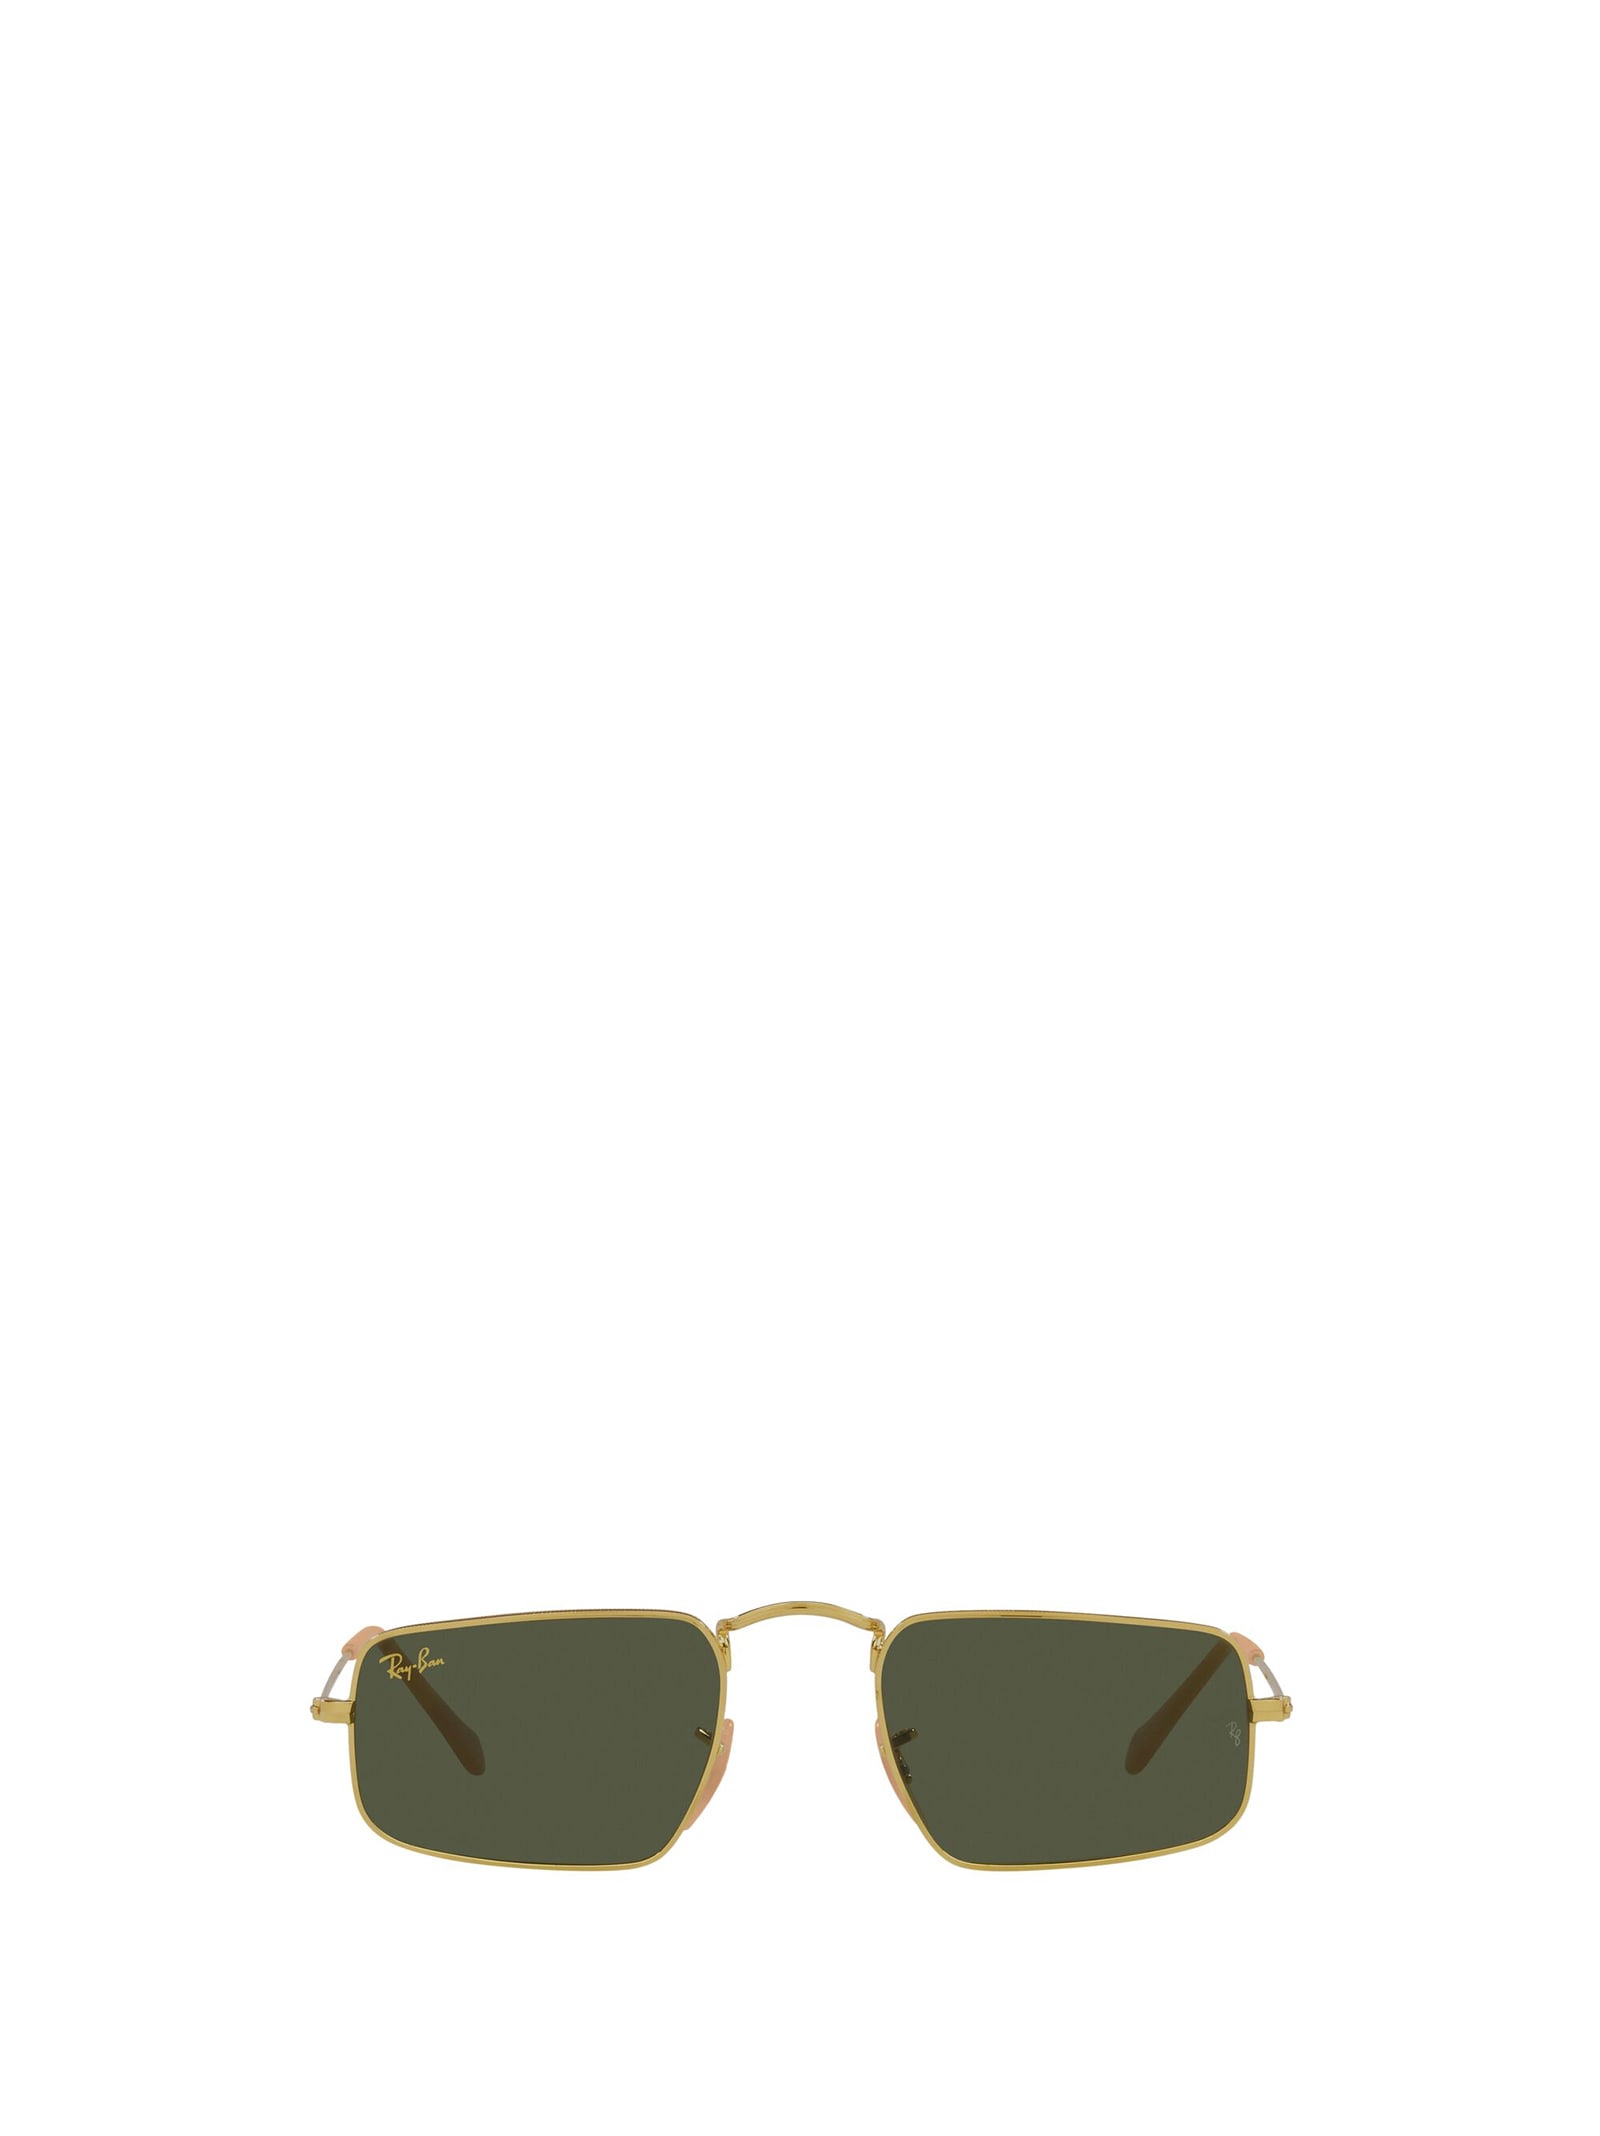 Ray-Ban Rb3957 Legend Gold Sunglasses